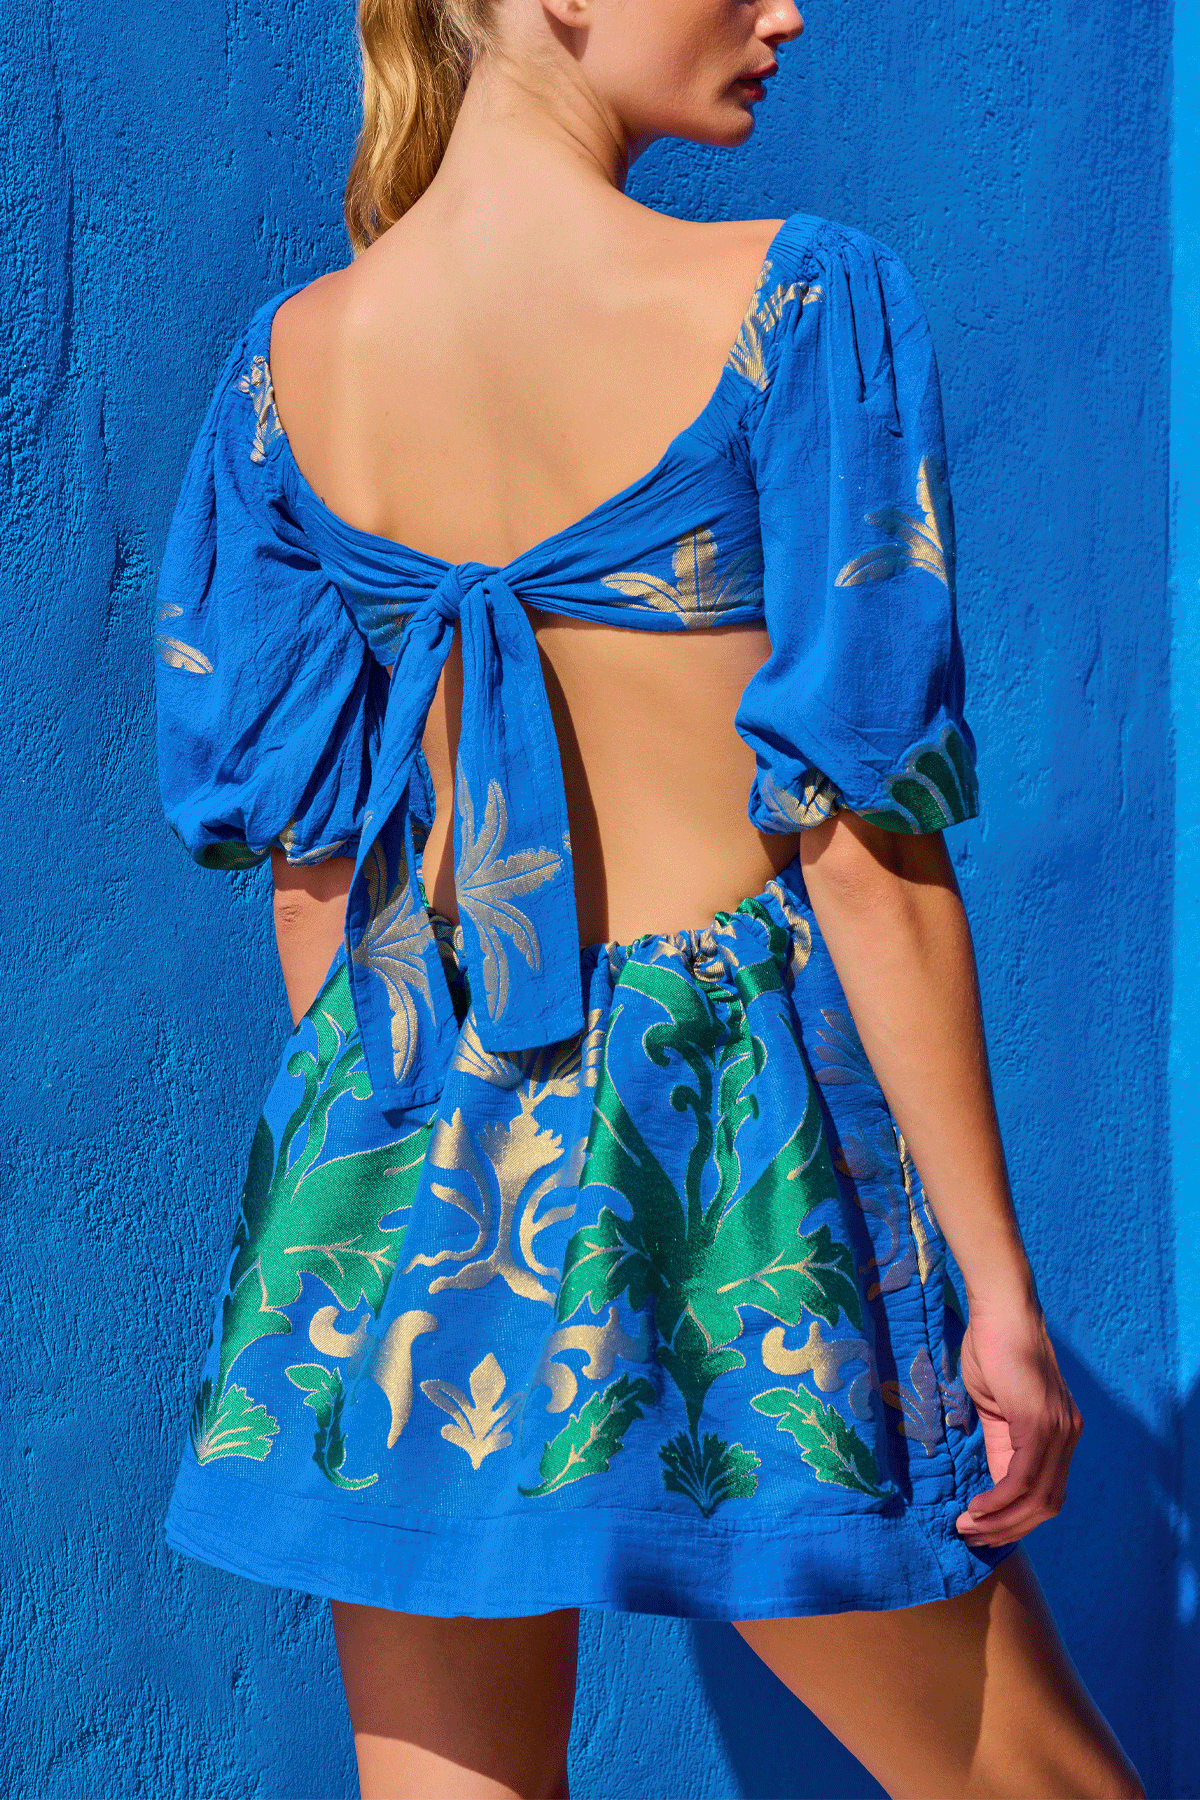 BACKLESS MINI DRESS "LEFKADA" BLUE